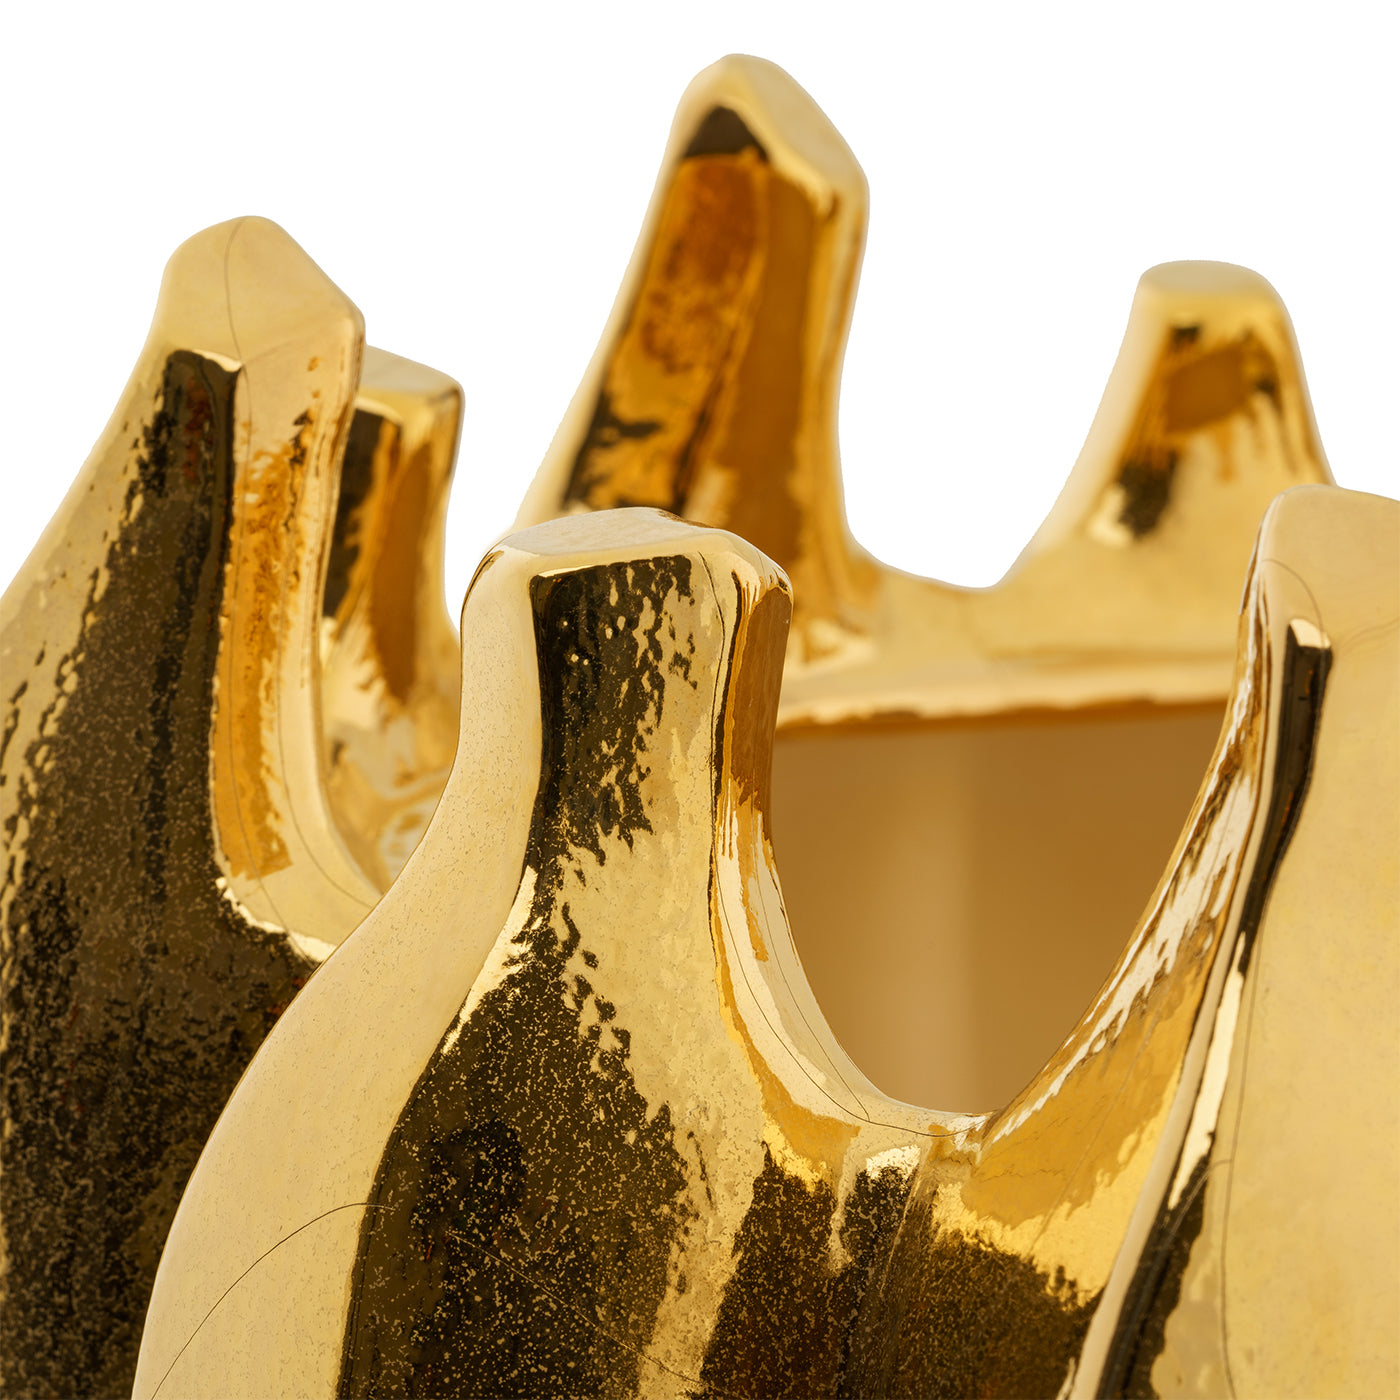 Thorn Large Gold Vase - Alternative view 1